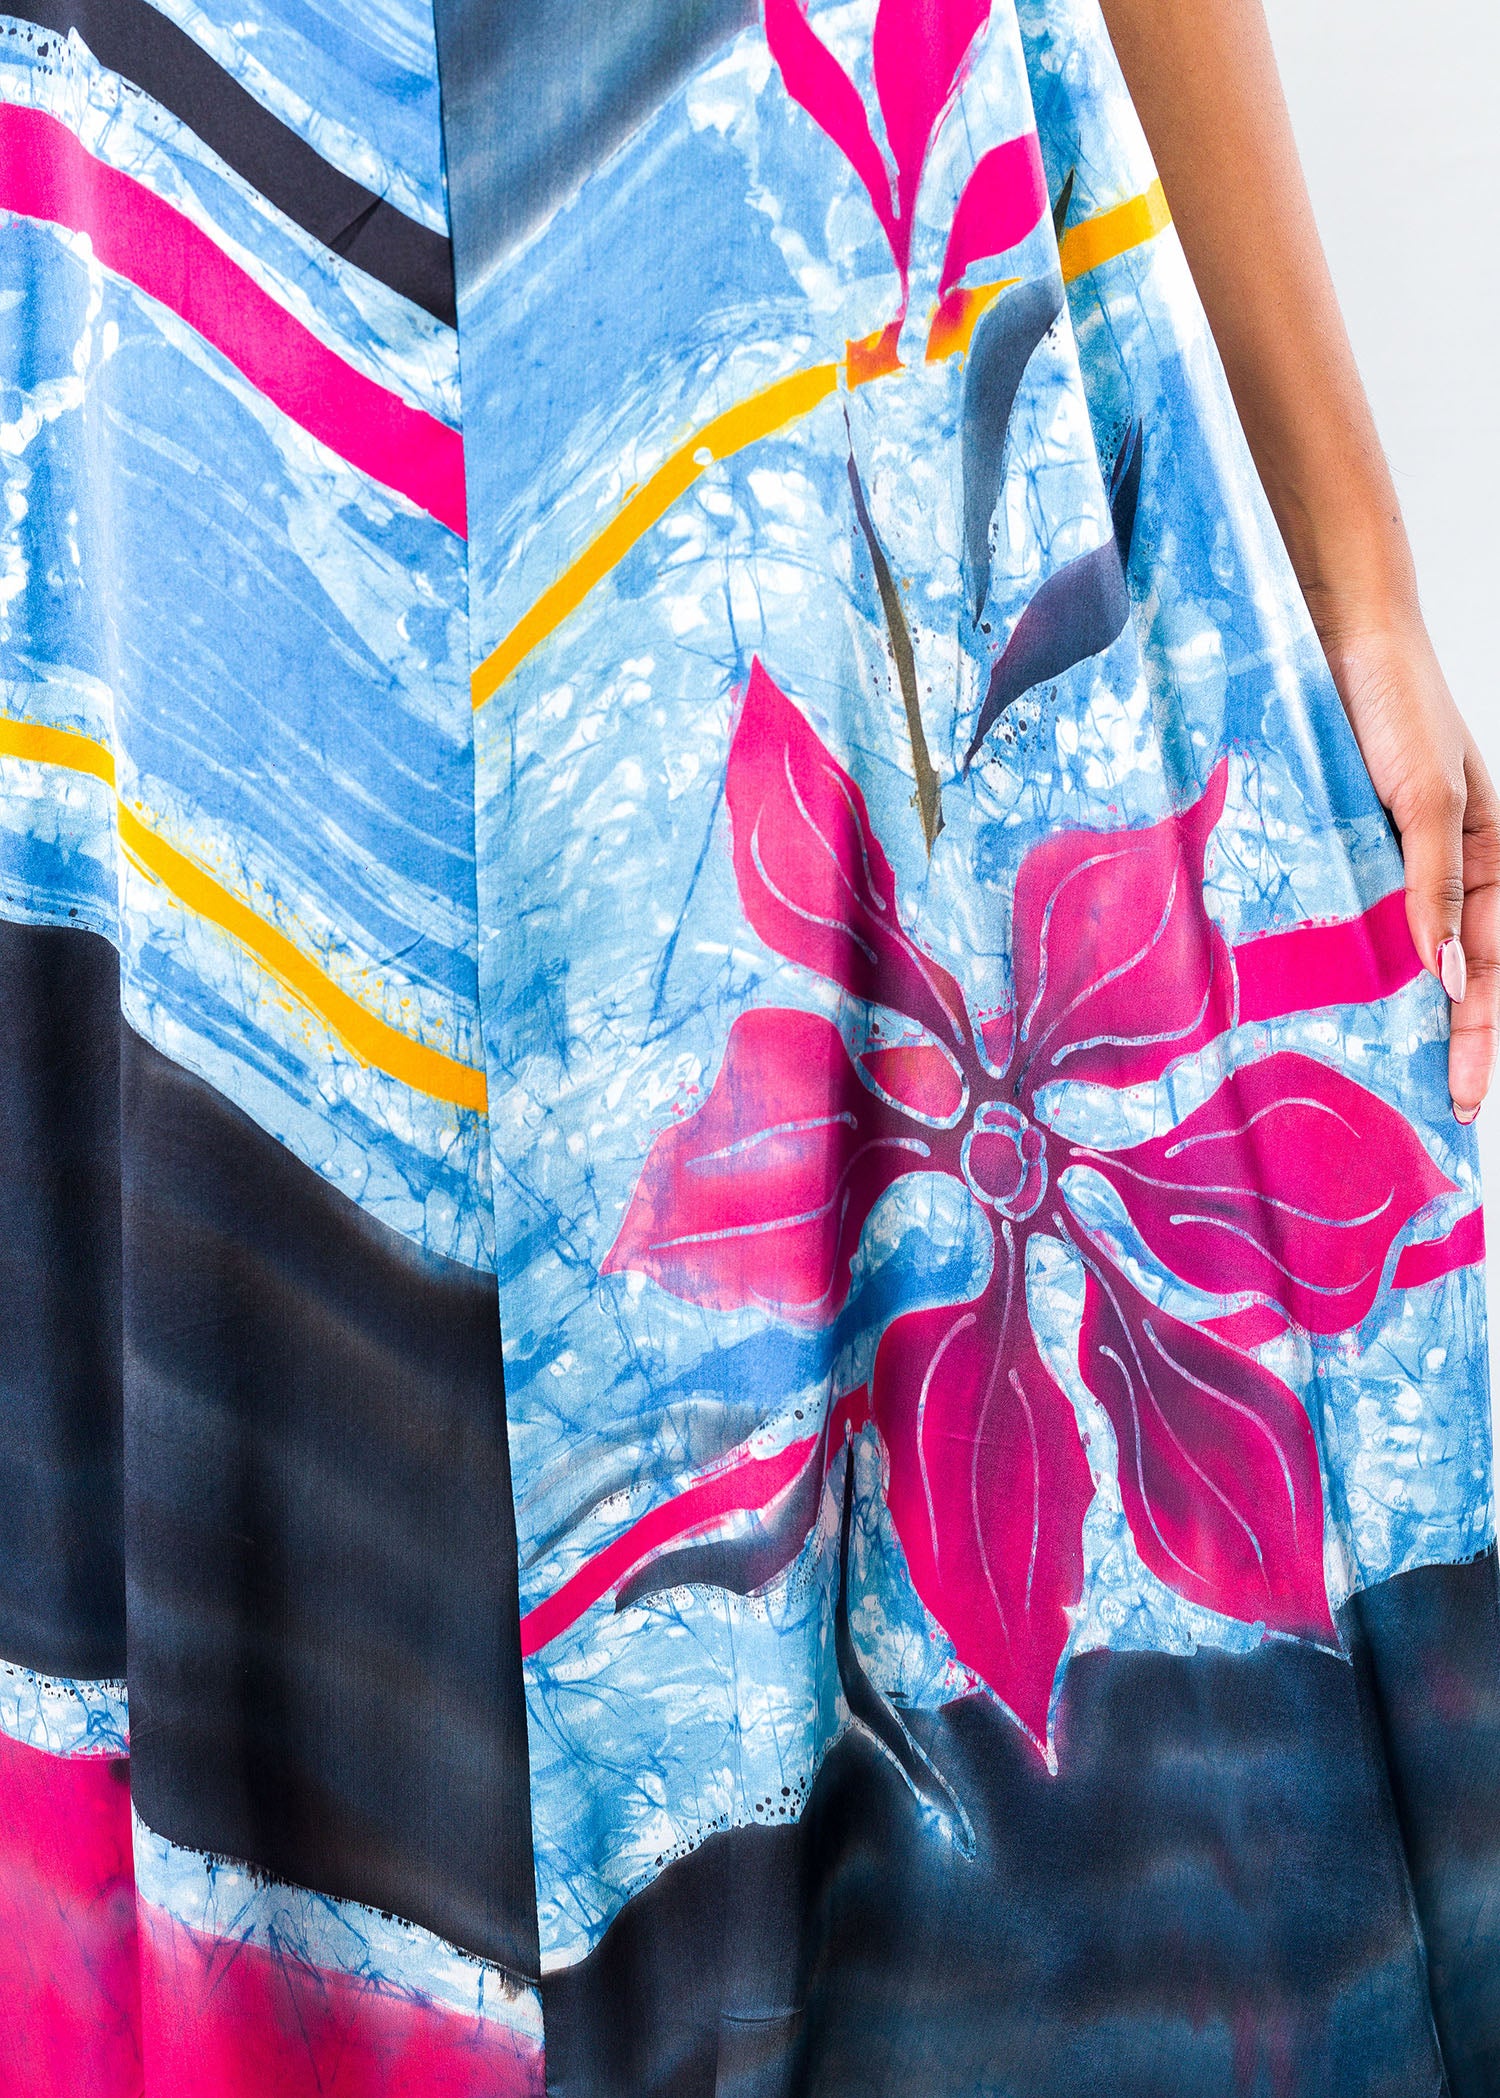 Sleeveless Batik Dress